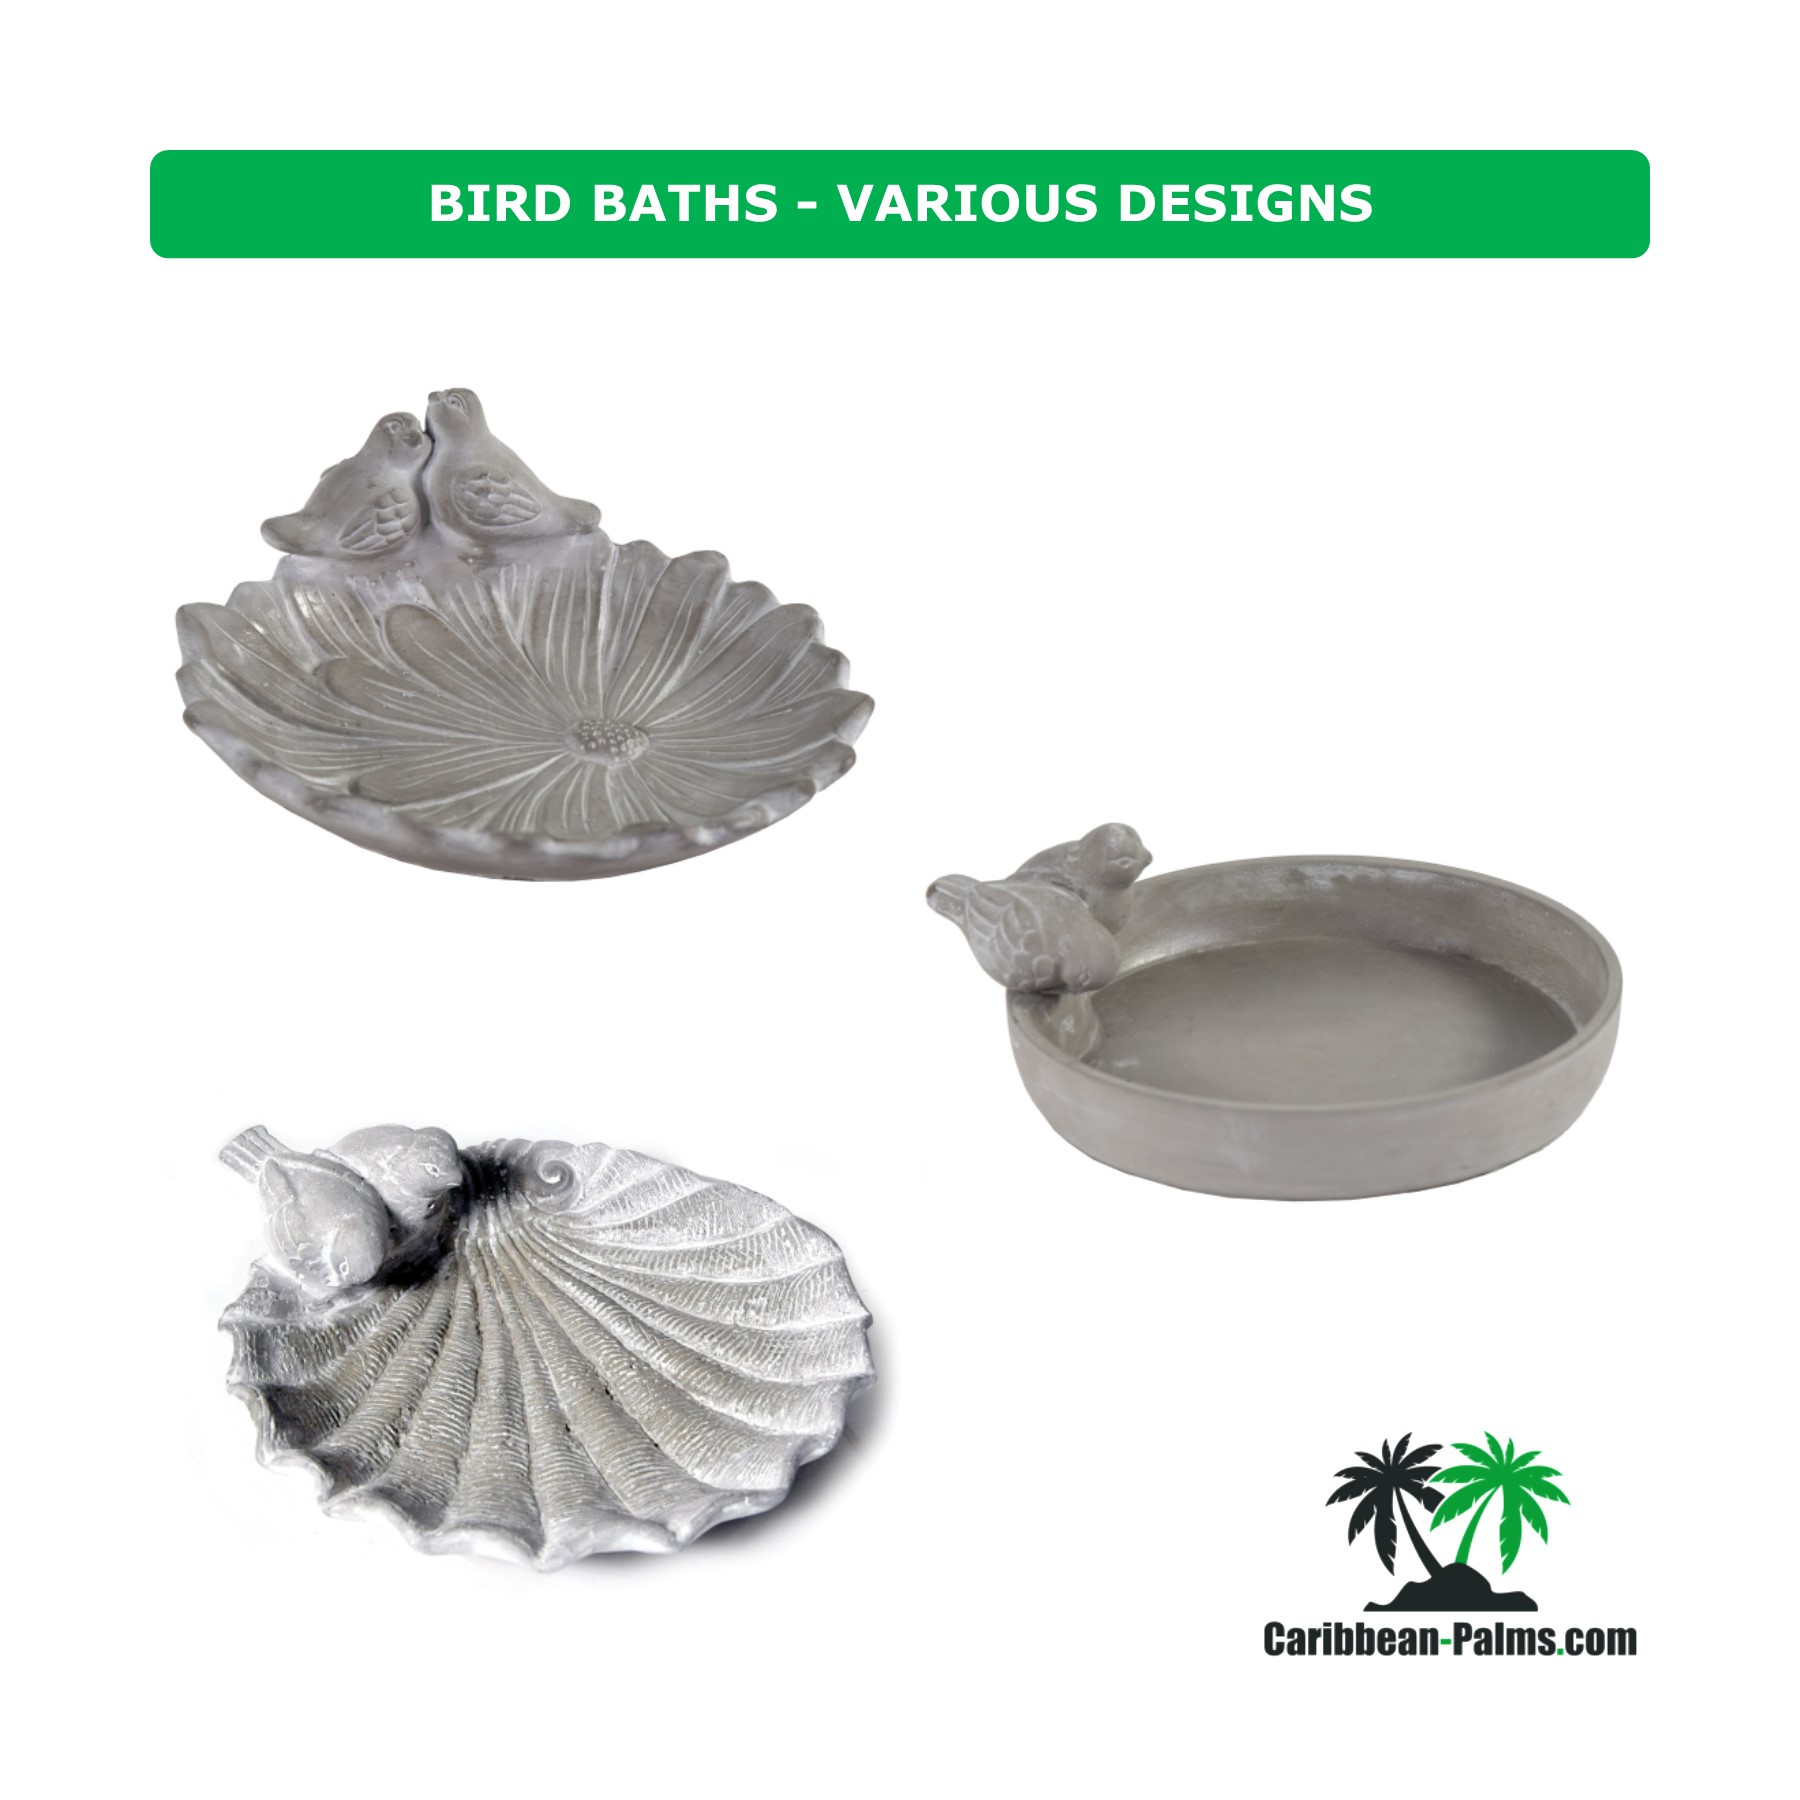 BIRD BATHS VARIOUS DESIGNS